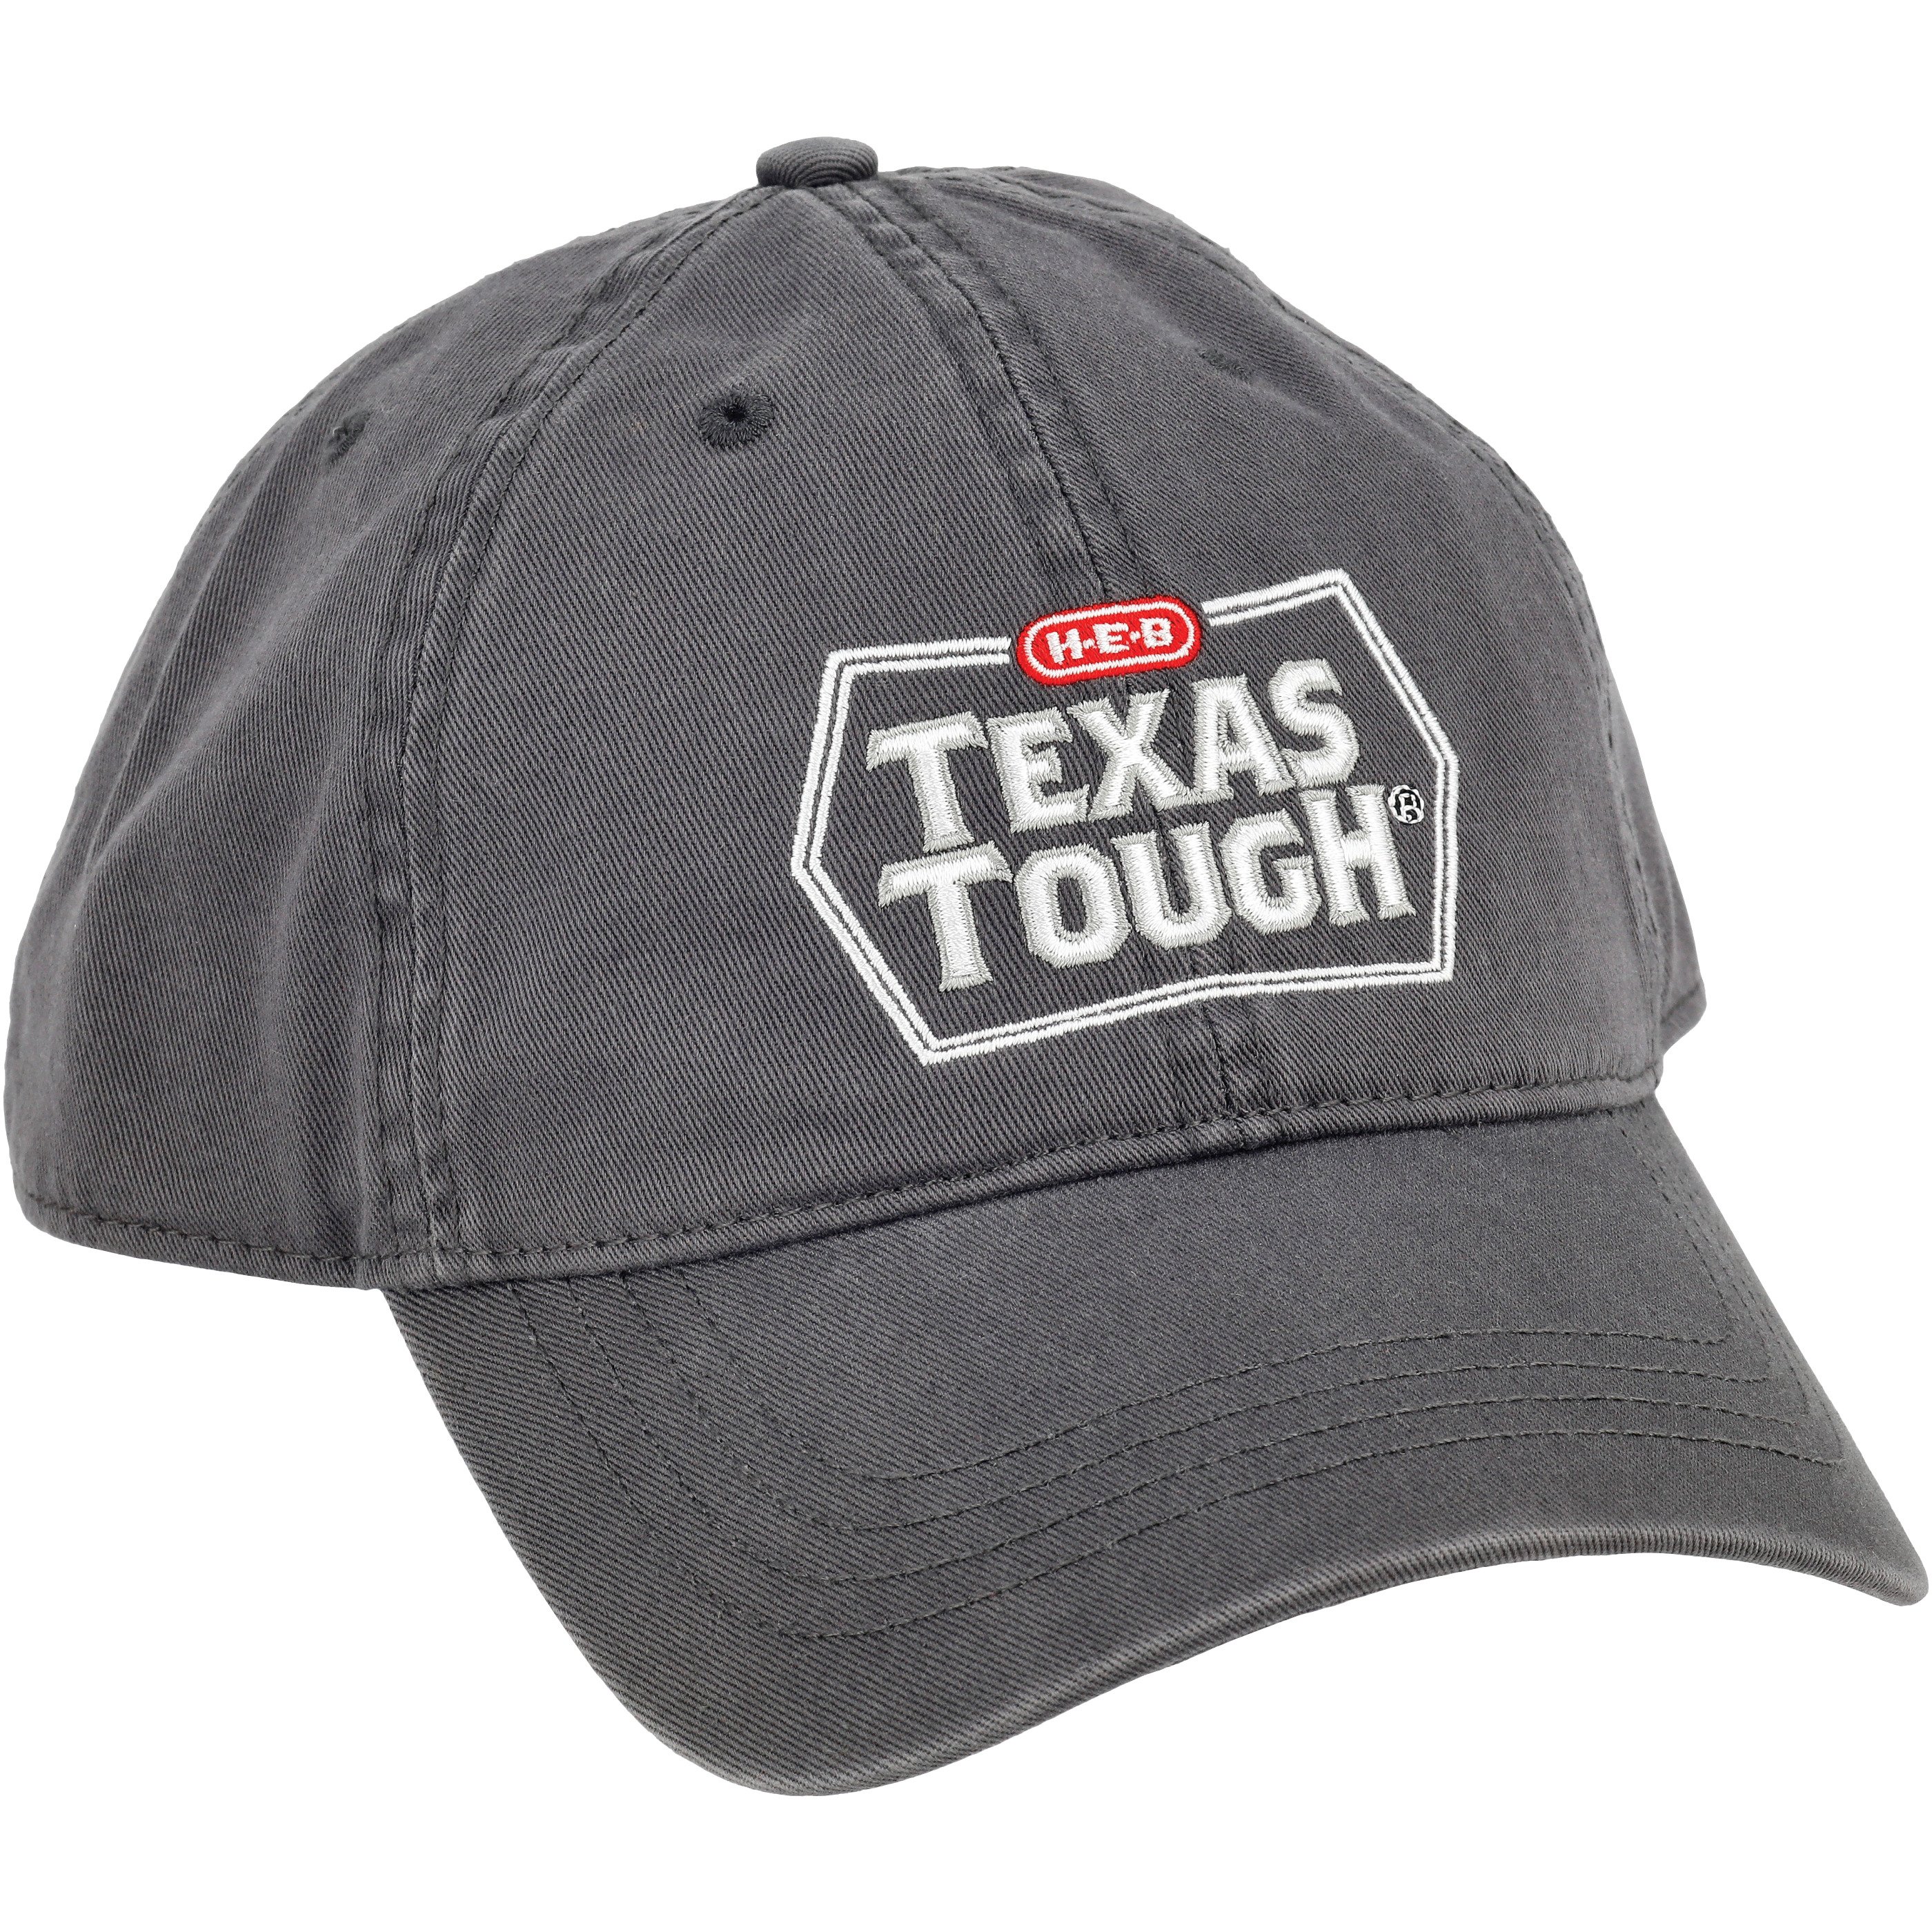 H-E-B Brand Shop Texas Tough Baseball Hat - Dark Gray